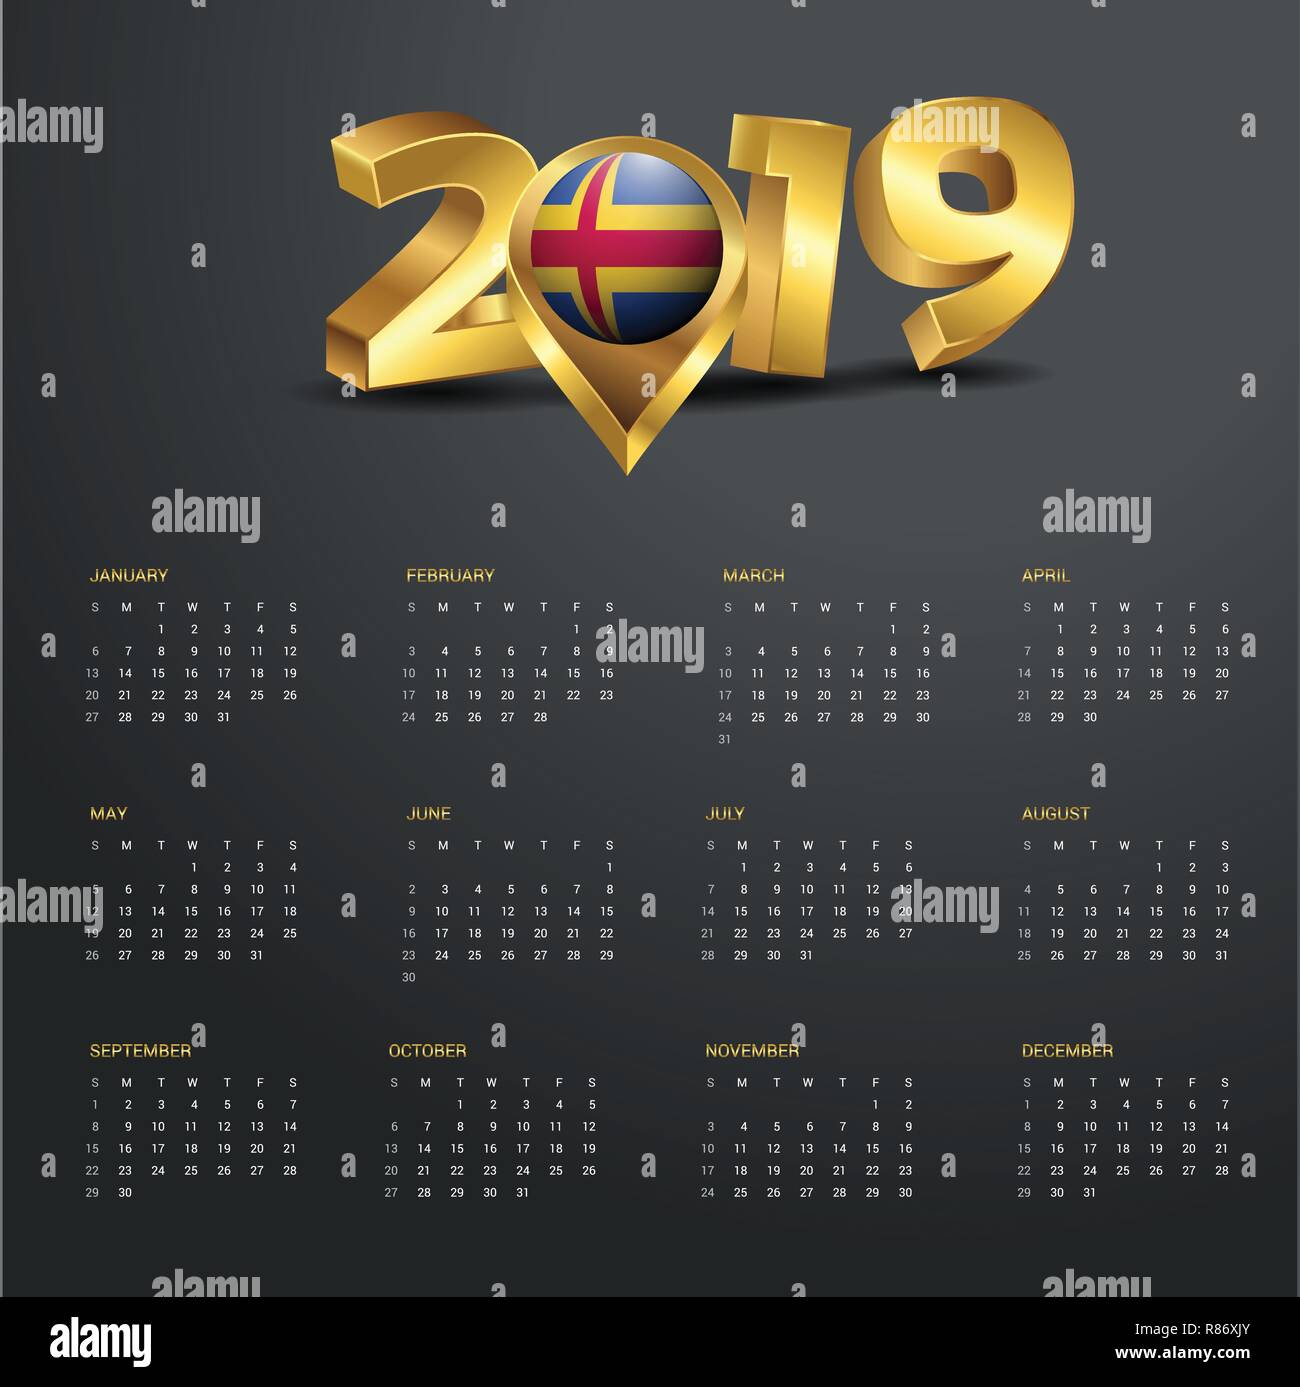 2019 Calendar Template. Aland Country Map Golden Typography Header Stock Vector